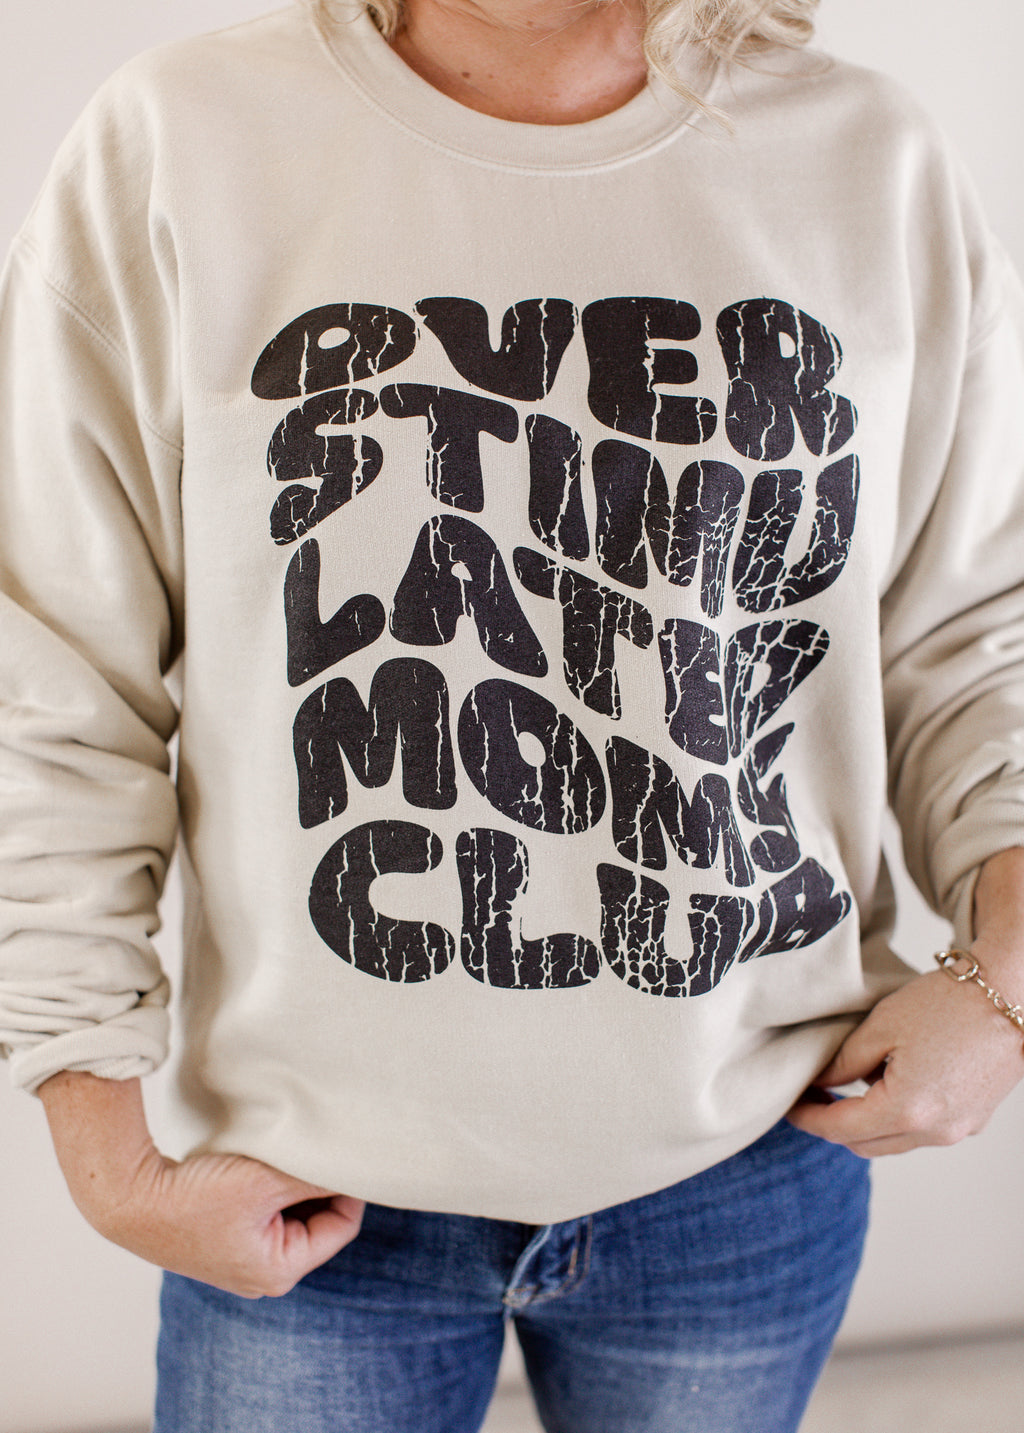 Overstimulated Moms Club Sweatshirt (S-3X) *SAND